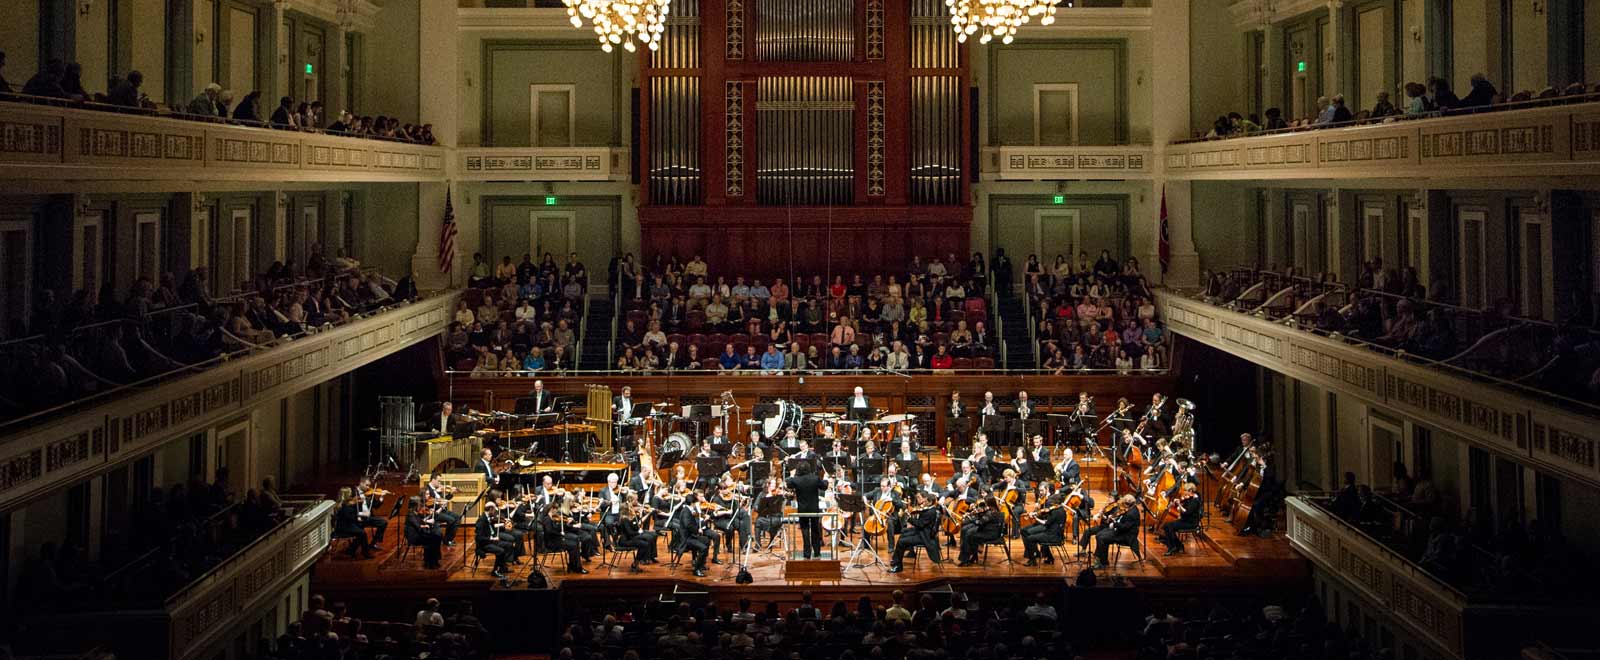 Nashville Symphony Orchestra Seating Chart